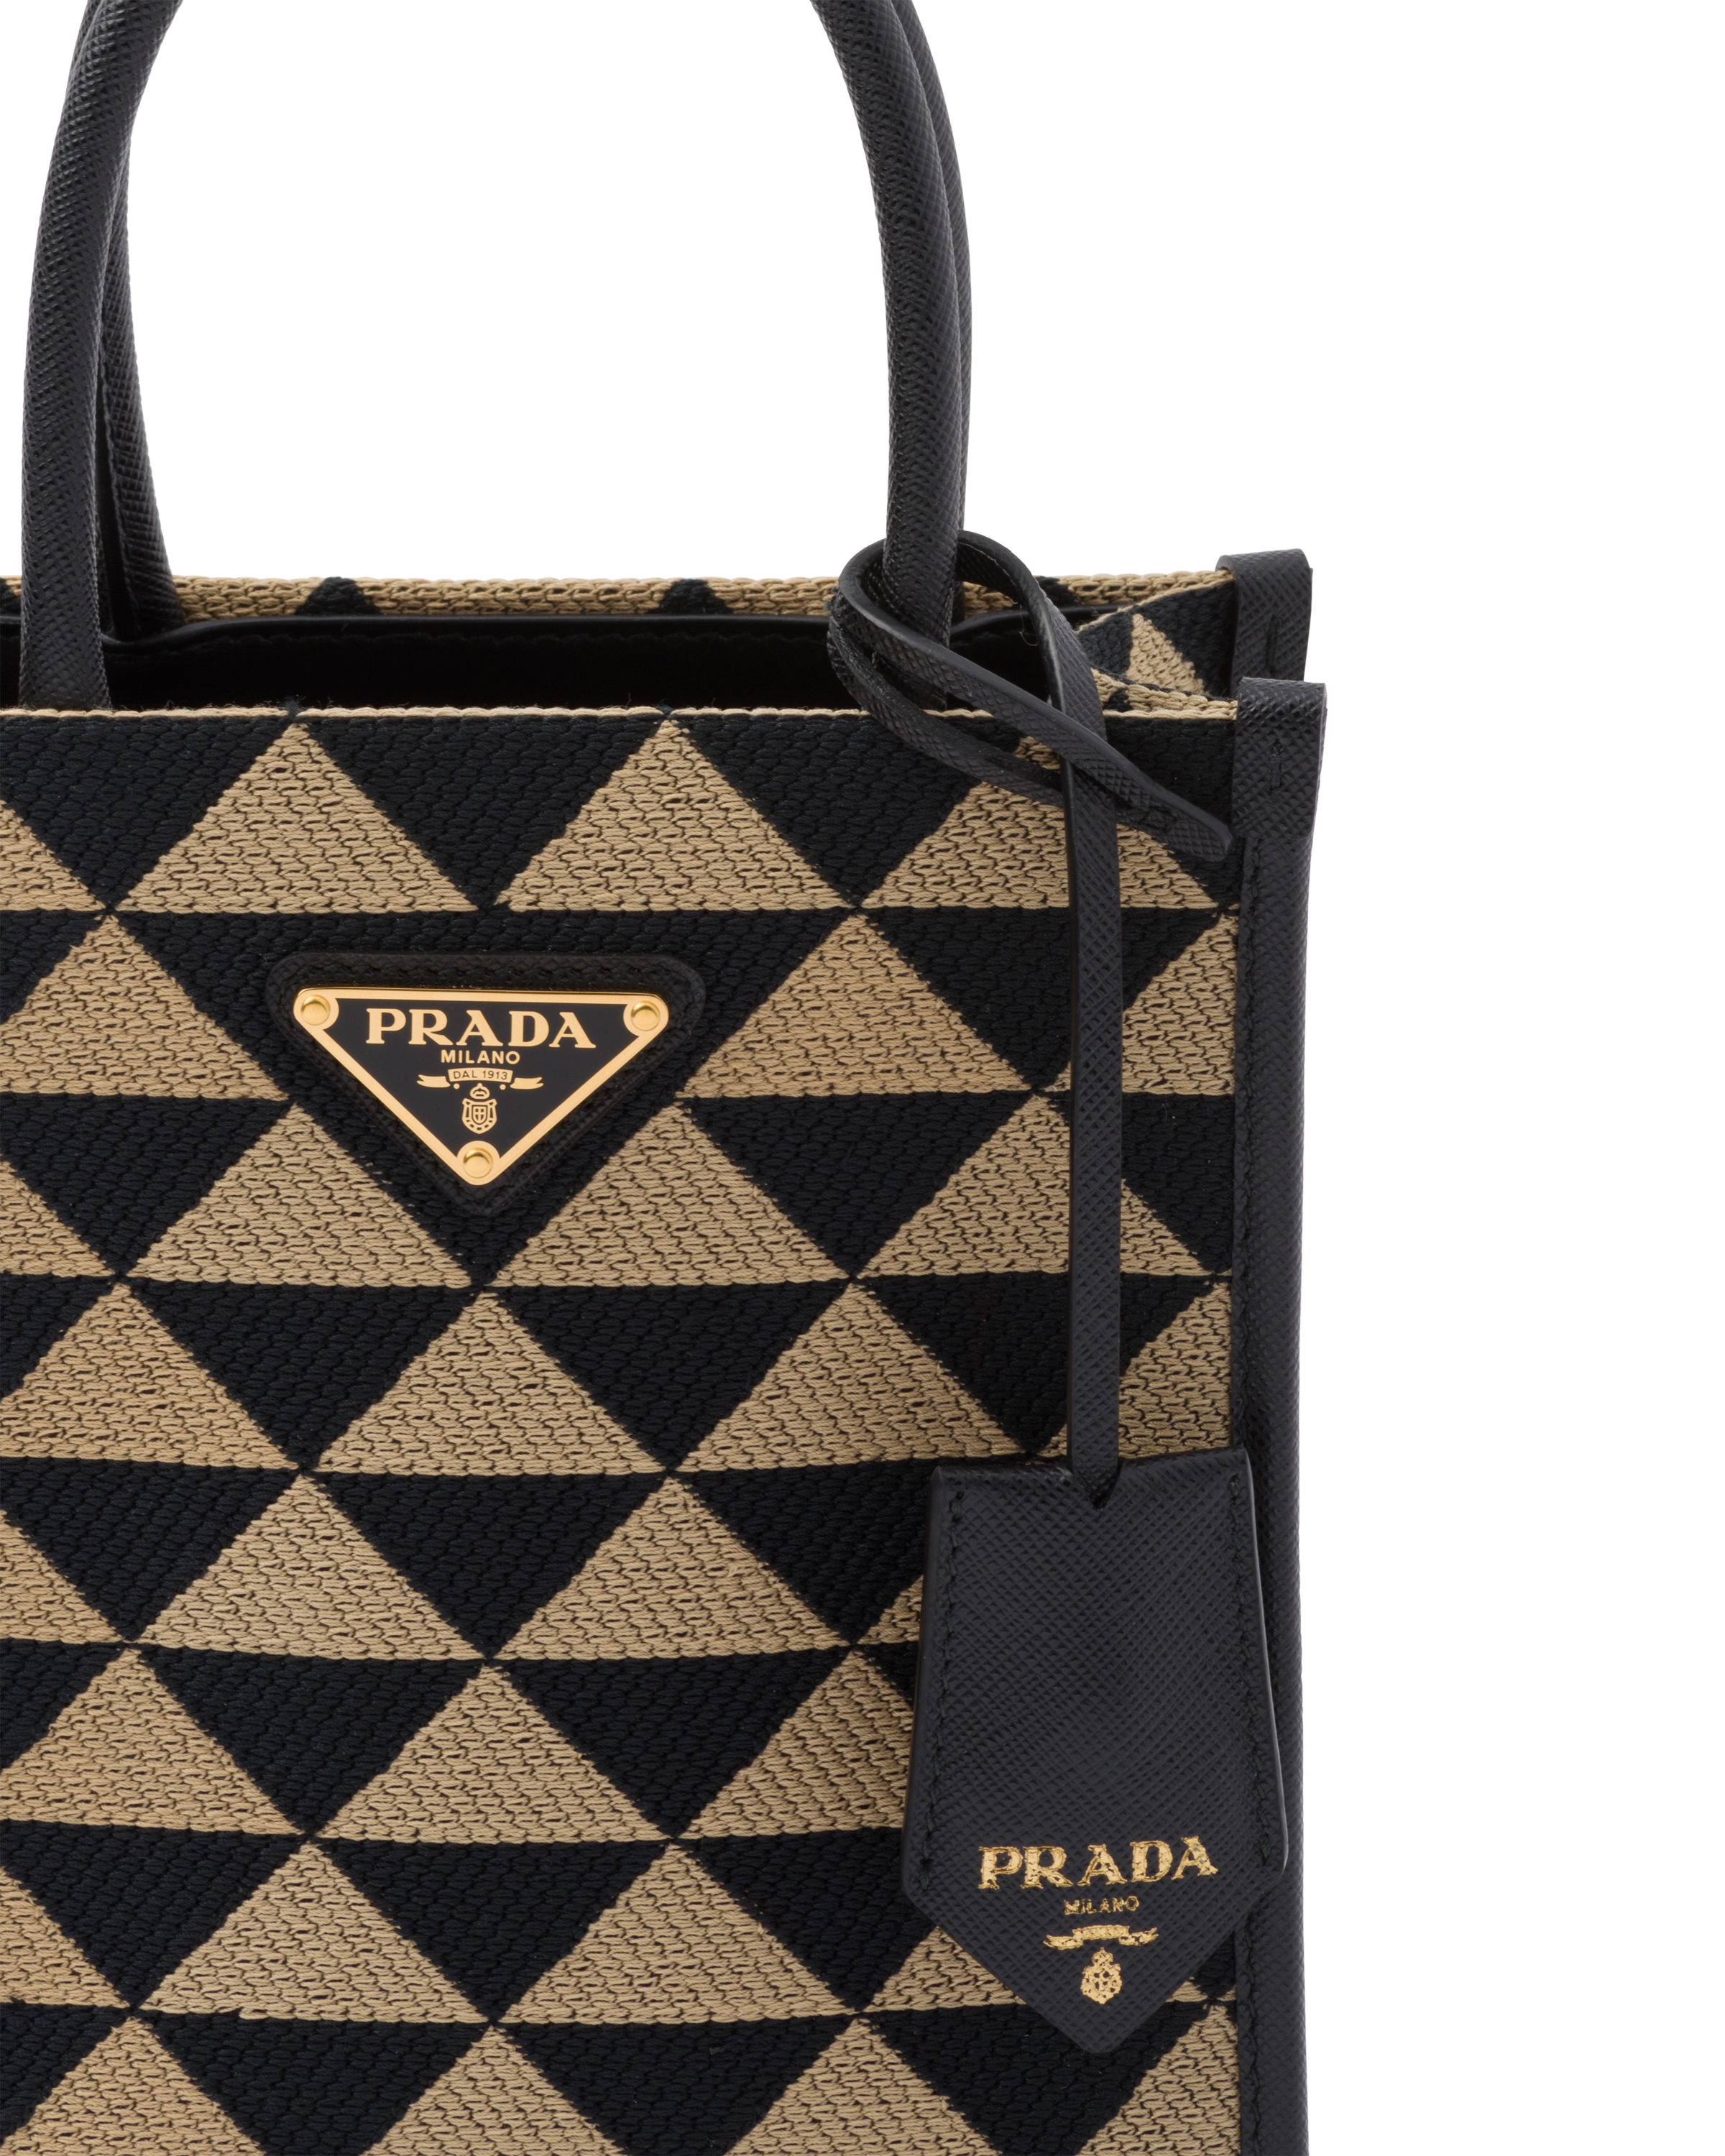 Prada Prada Symbole Small Embroidered Fabric Top Handle Tote Bag